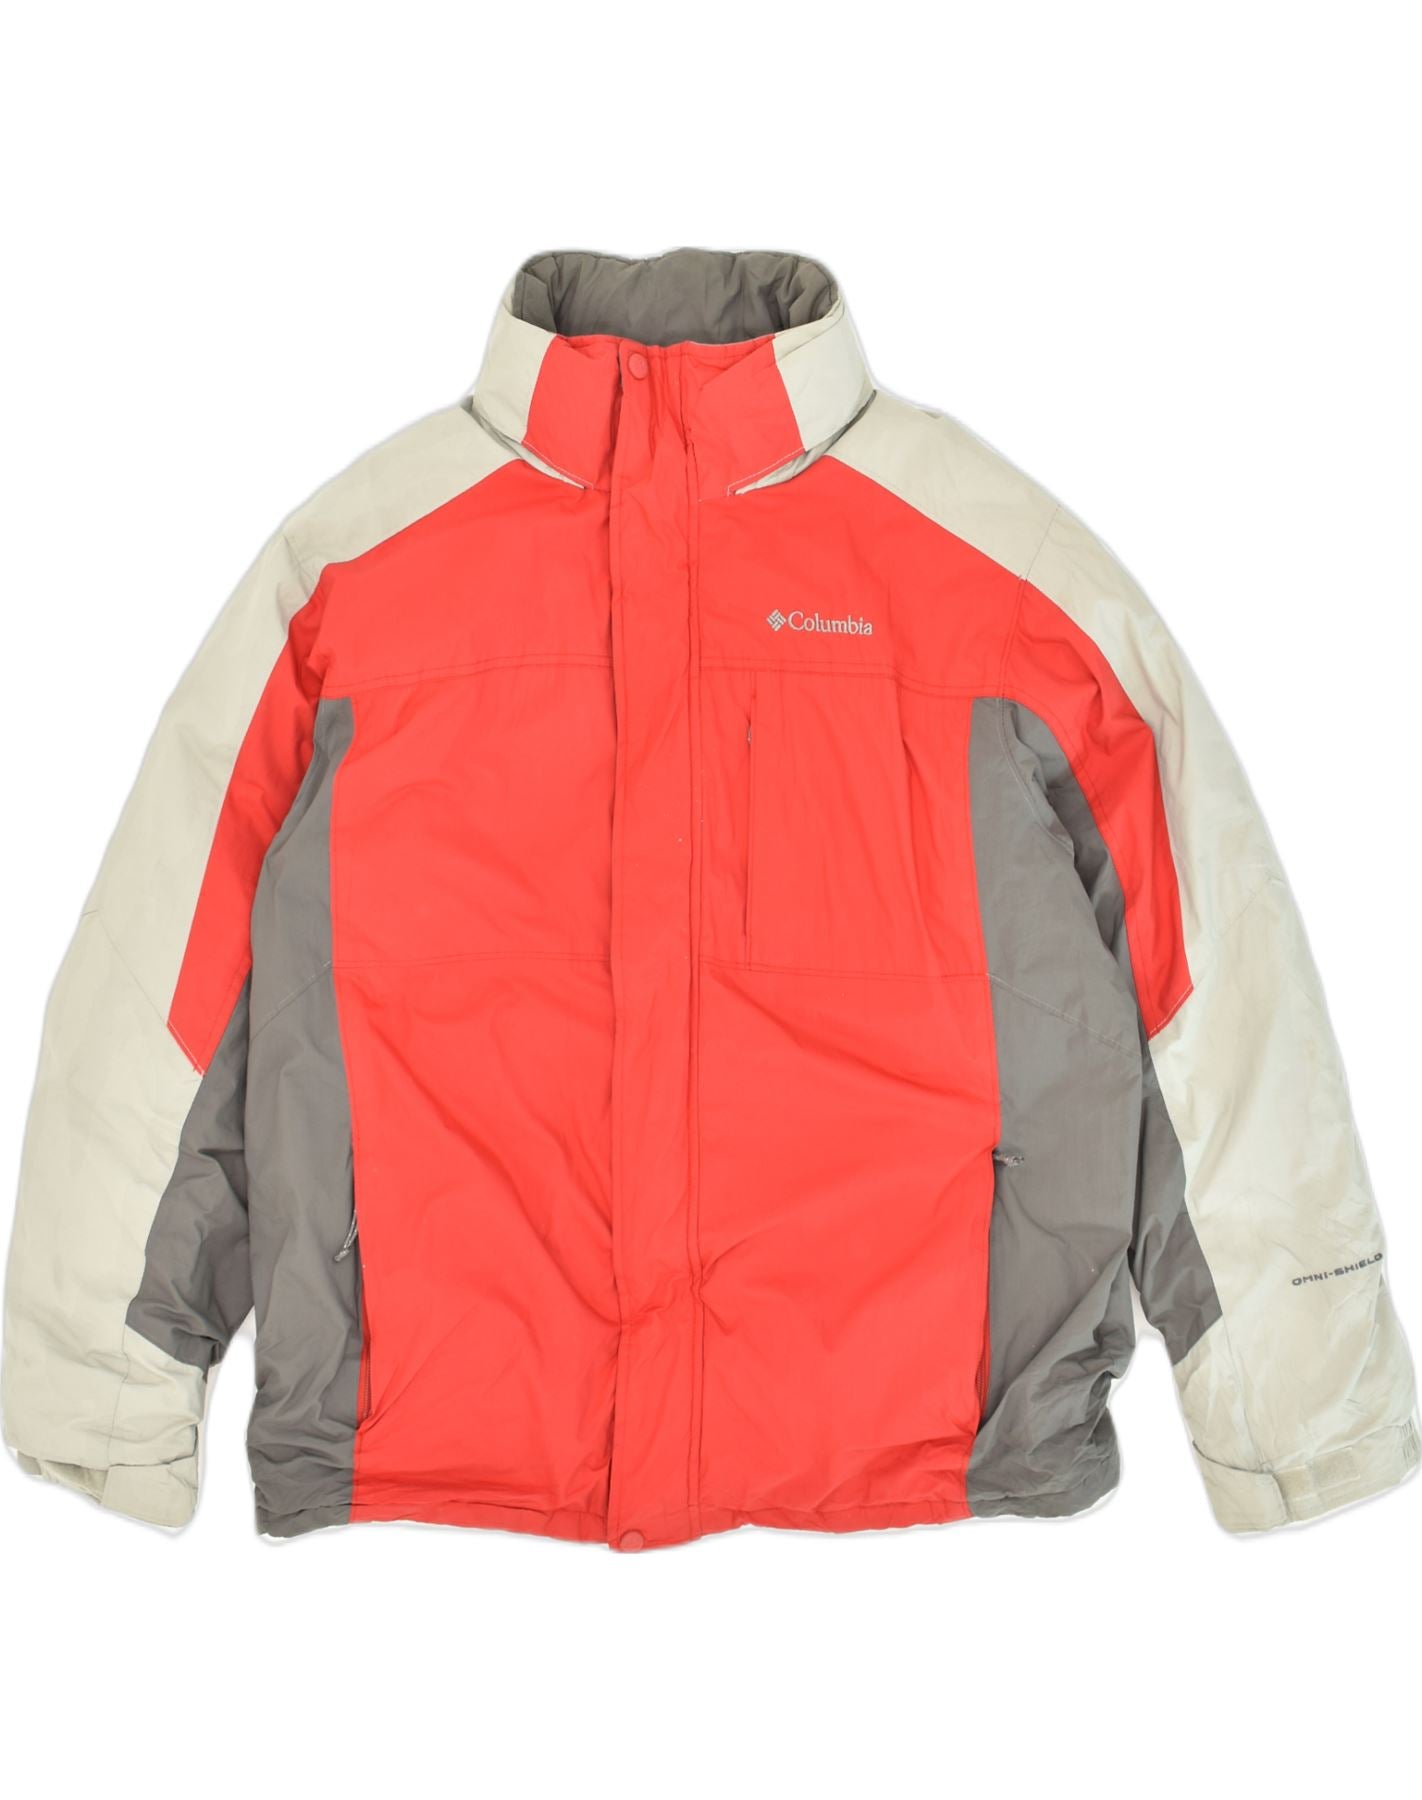 COLUMBIA Mens Omni-Shield Windbreaker Jacket UK 40 Large Red Colourblock, Vintage & Second-Hand Clothing Online